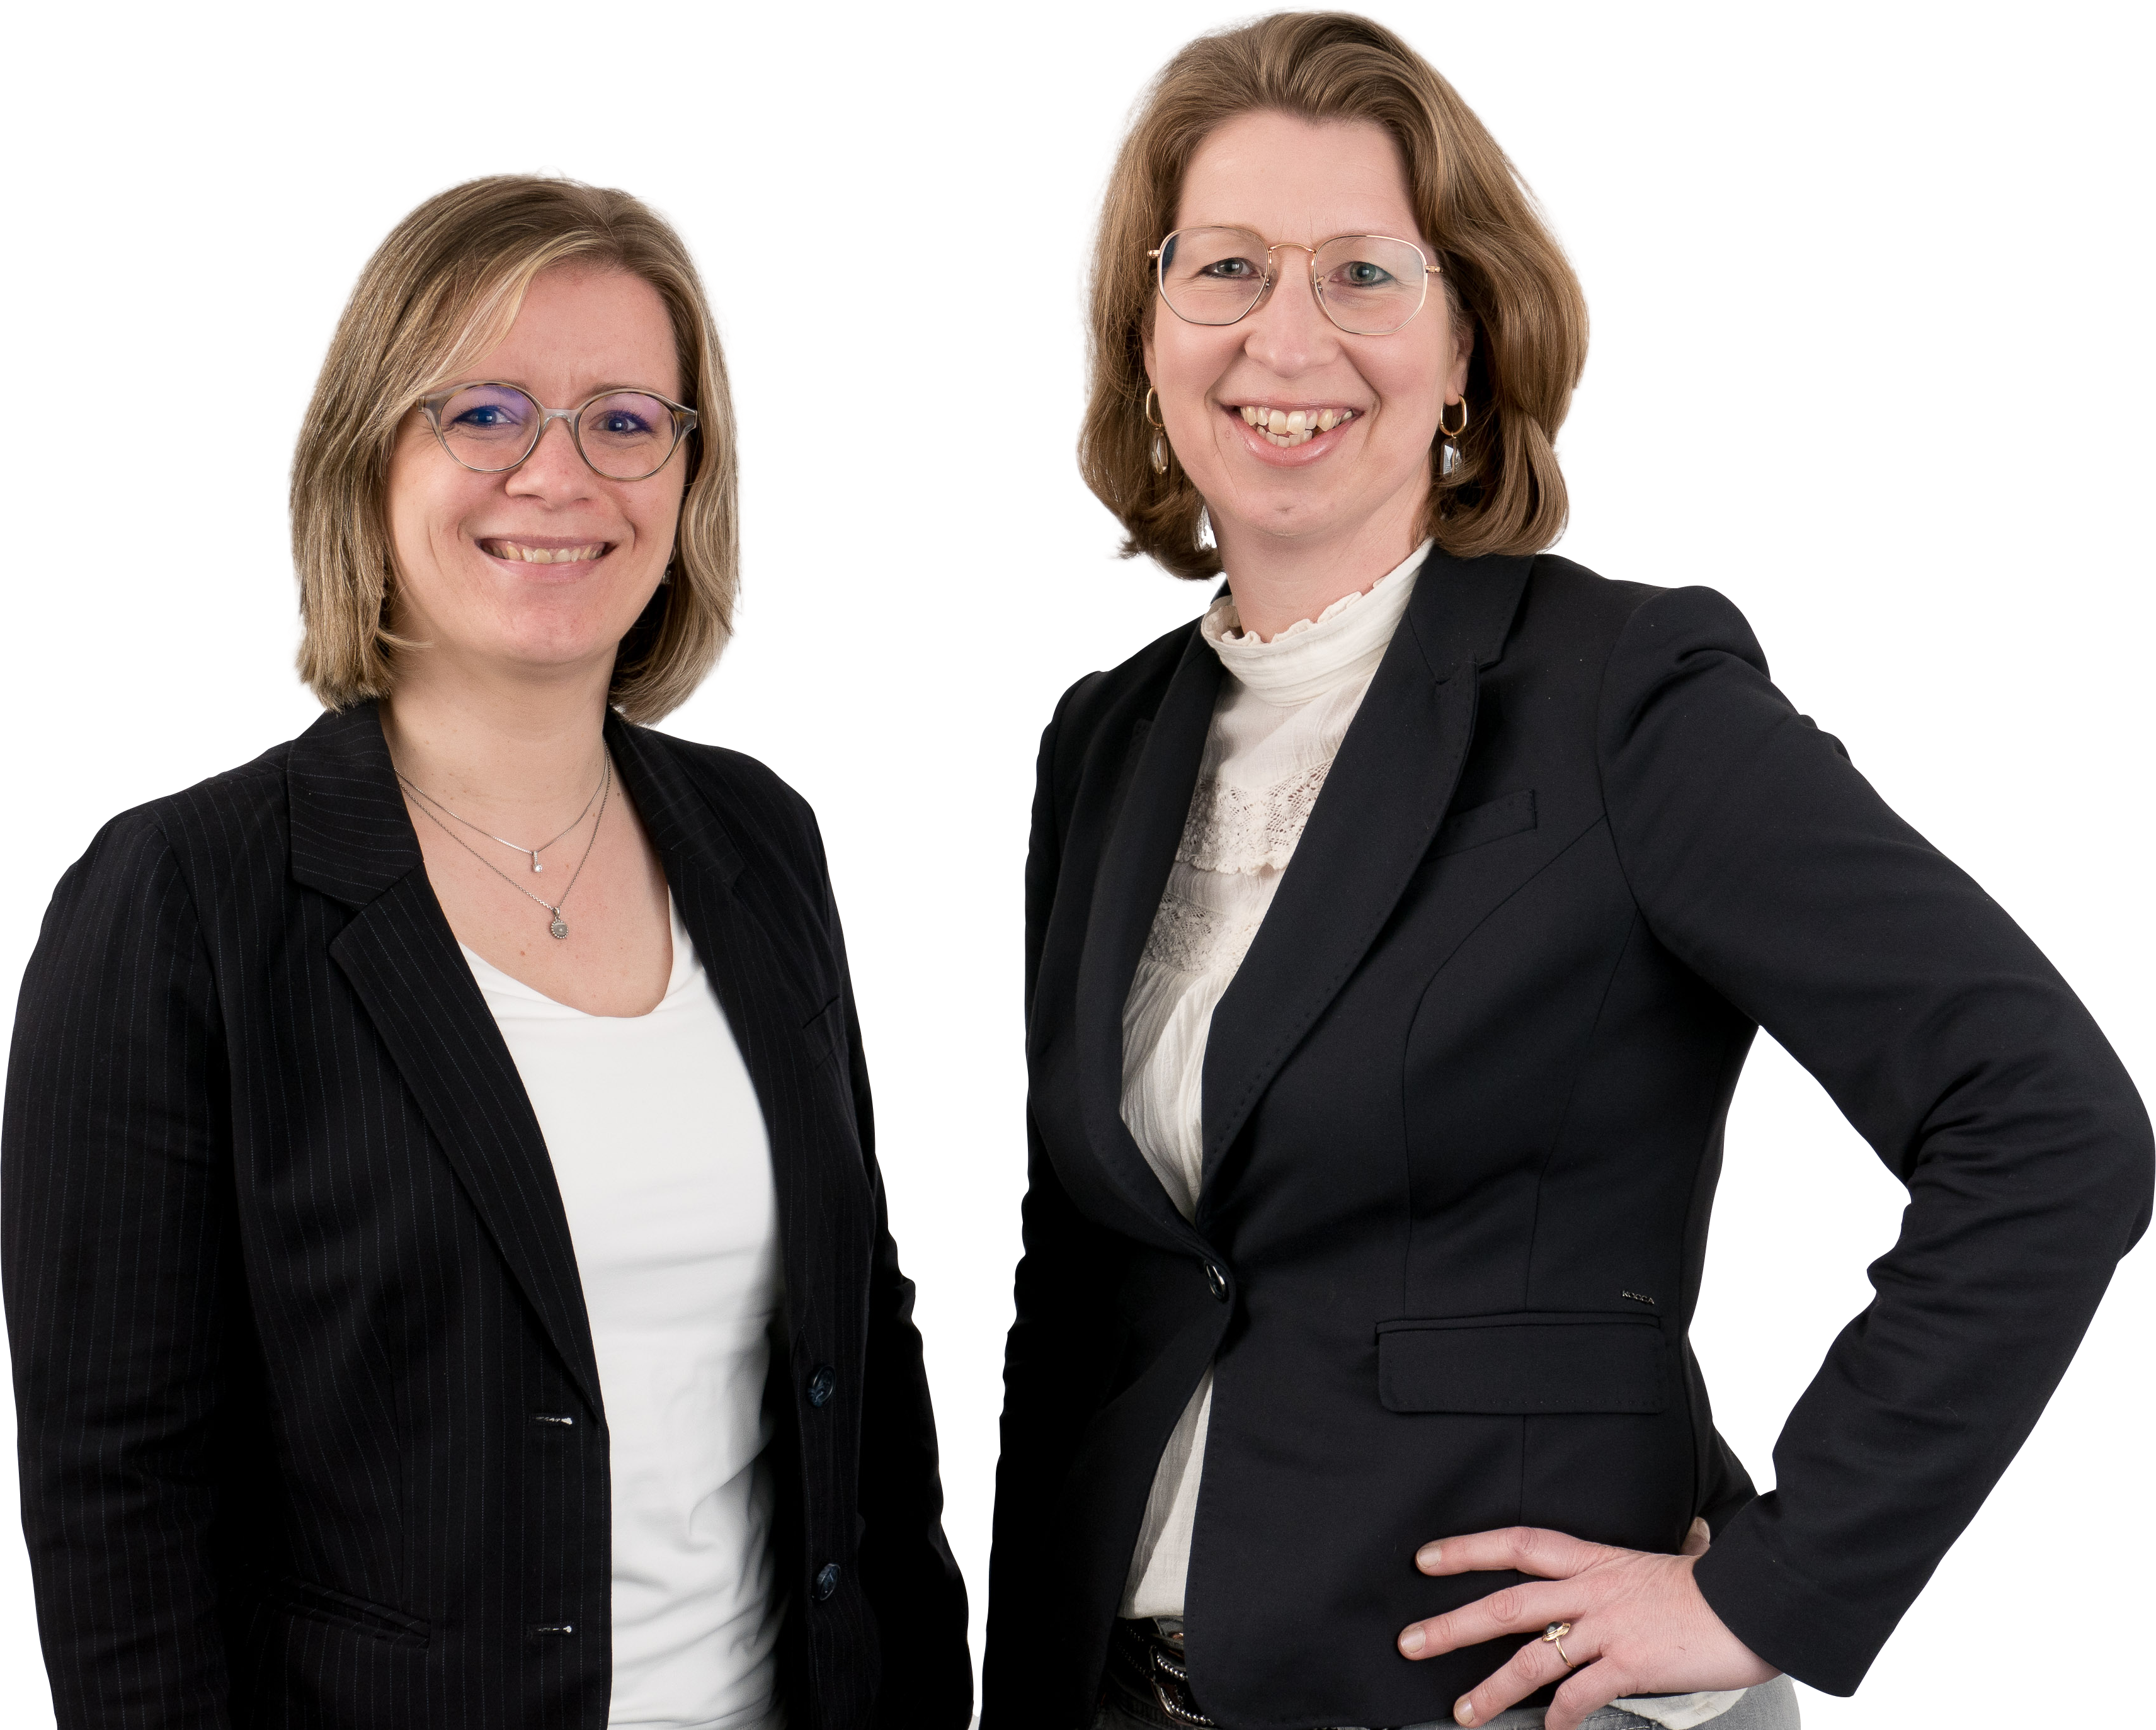 Onemeeting Services team - Ingrid & Savielle